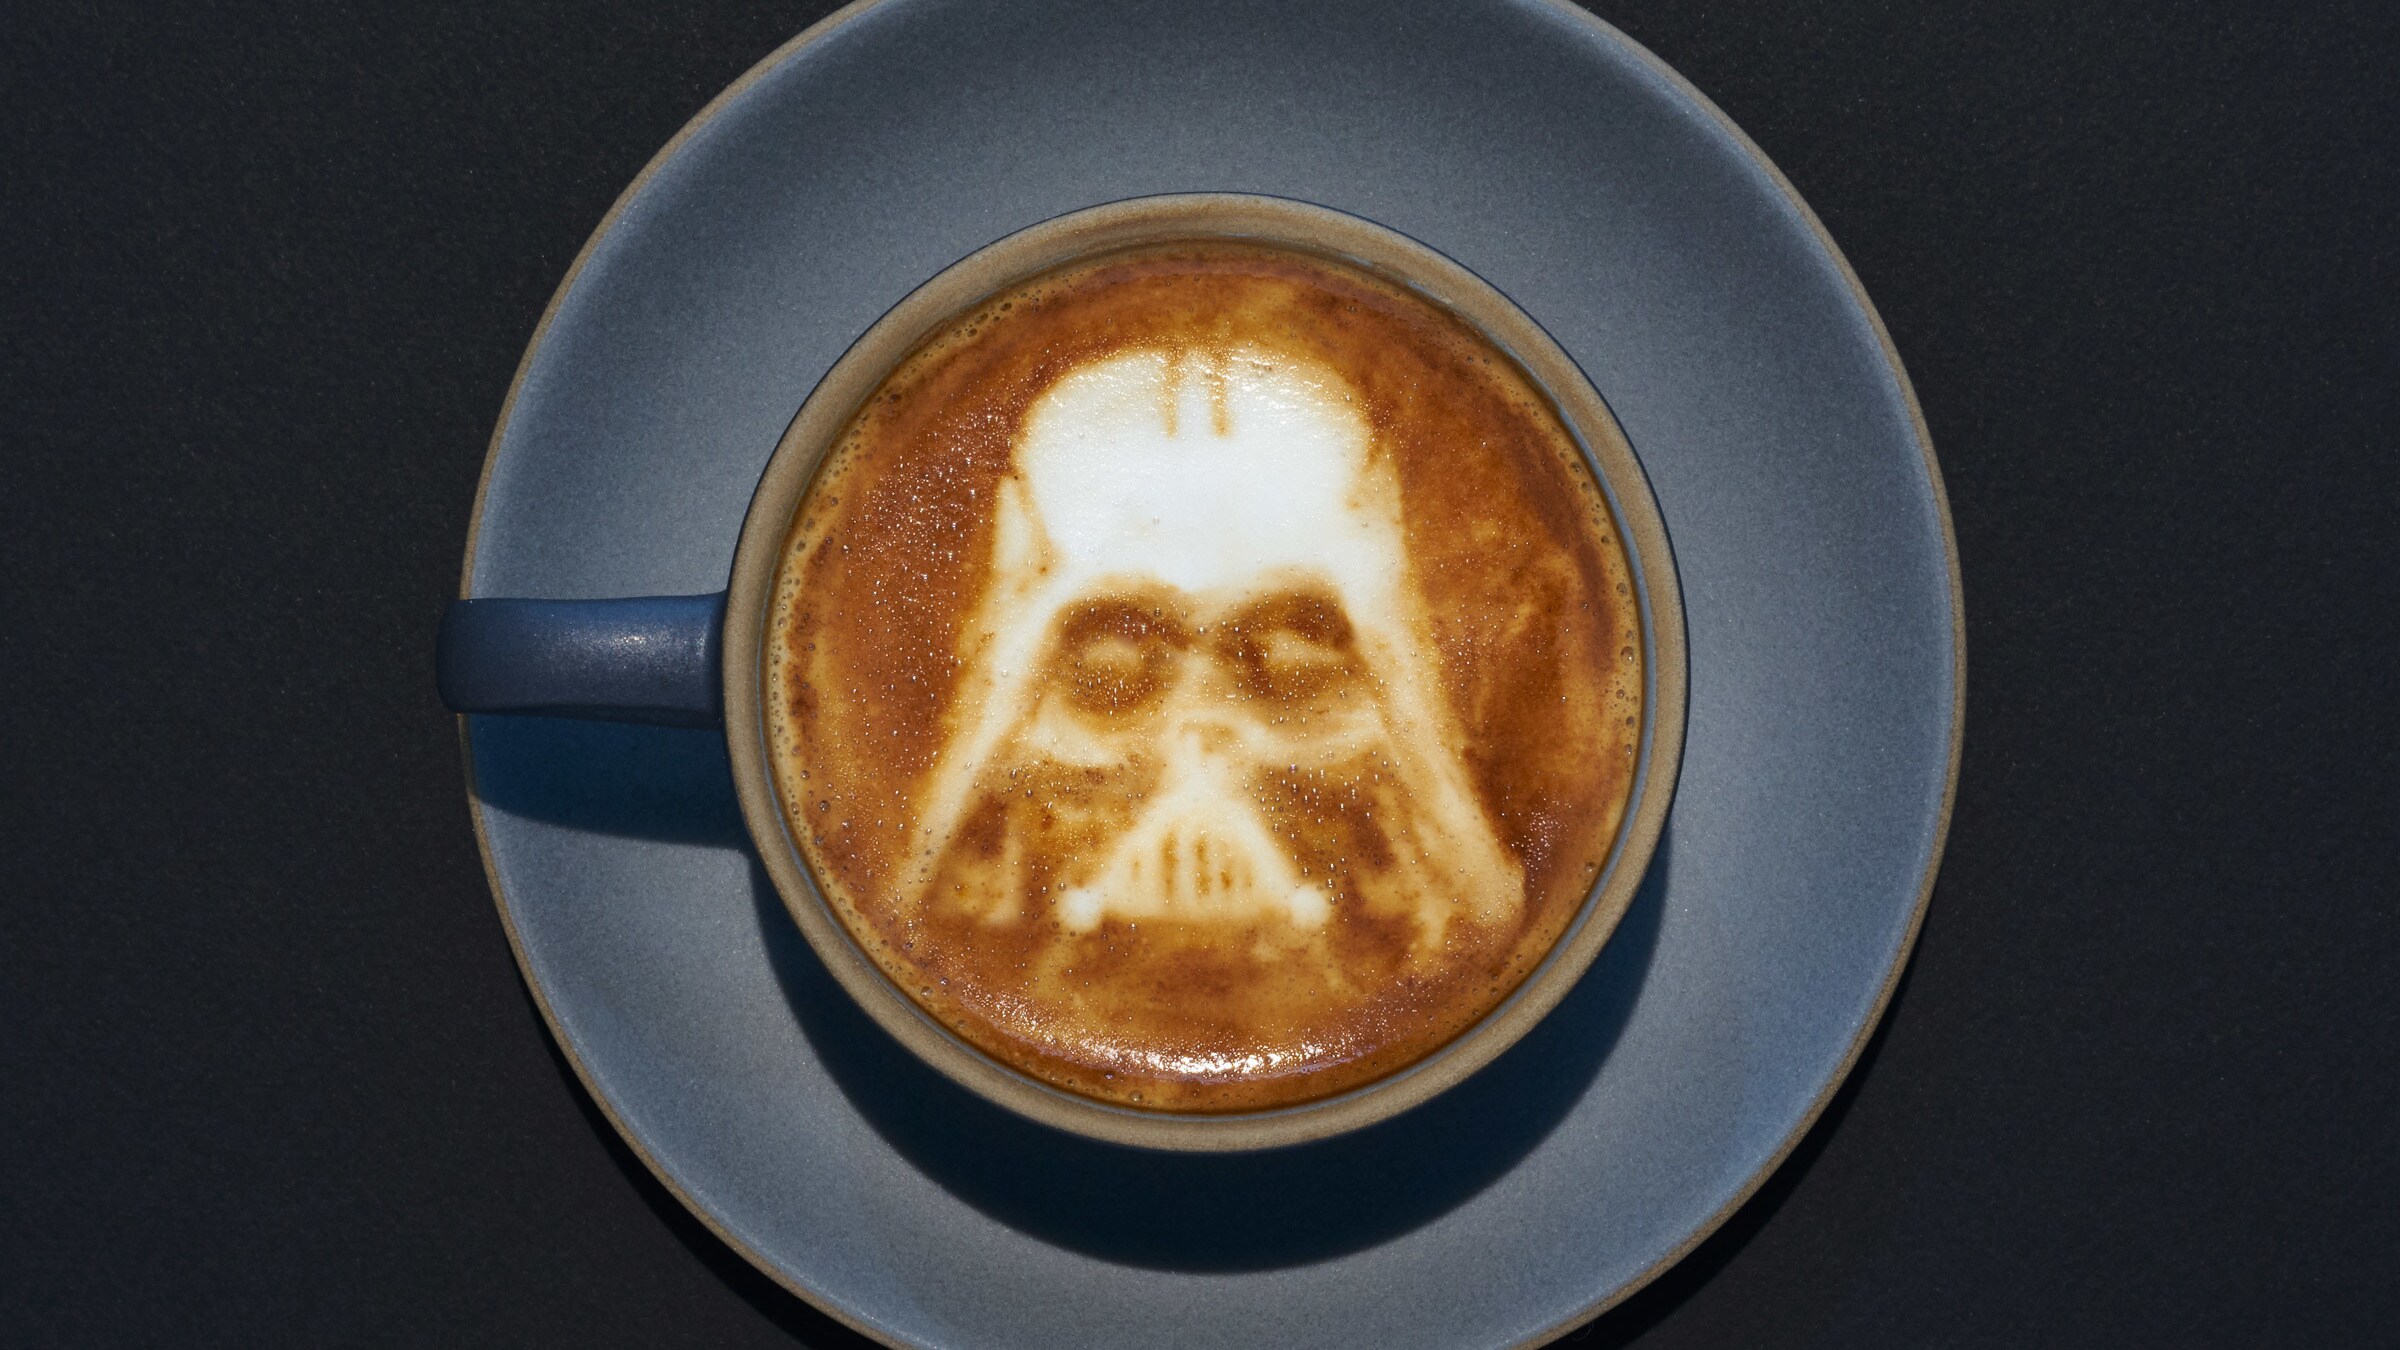 Star Wars Art on a New Canvas: Coffee